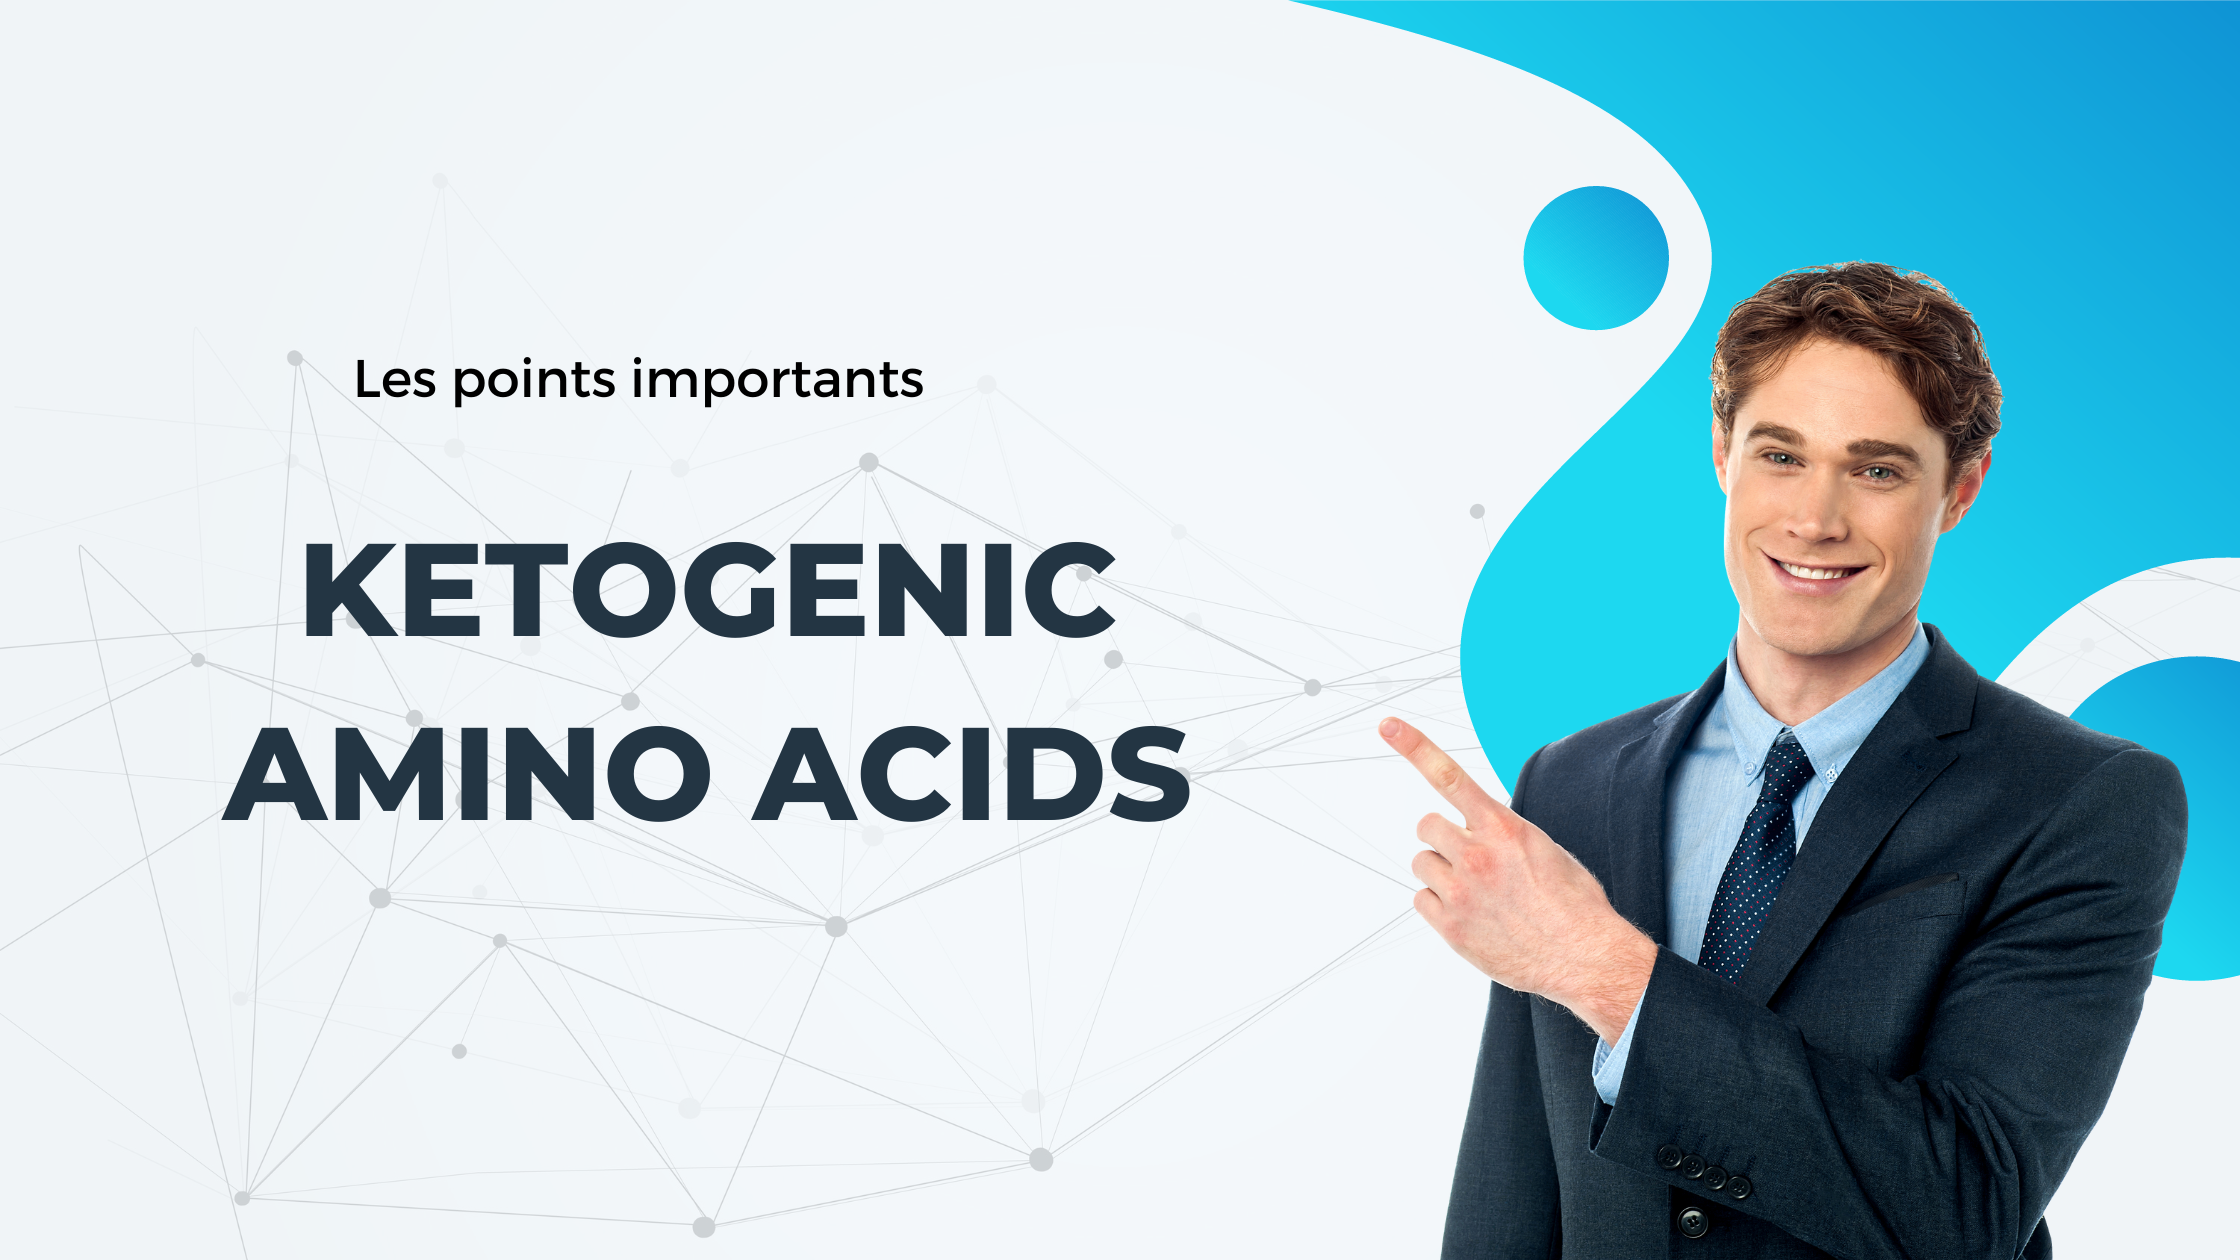 ketogenic amino acids | Les points importants